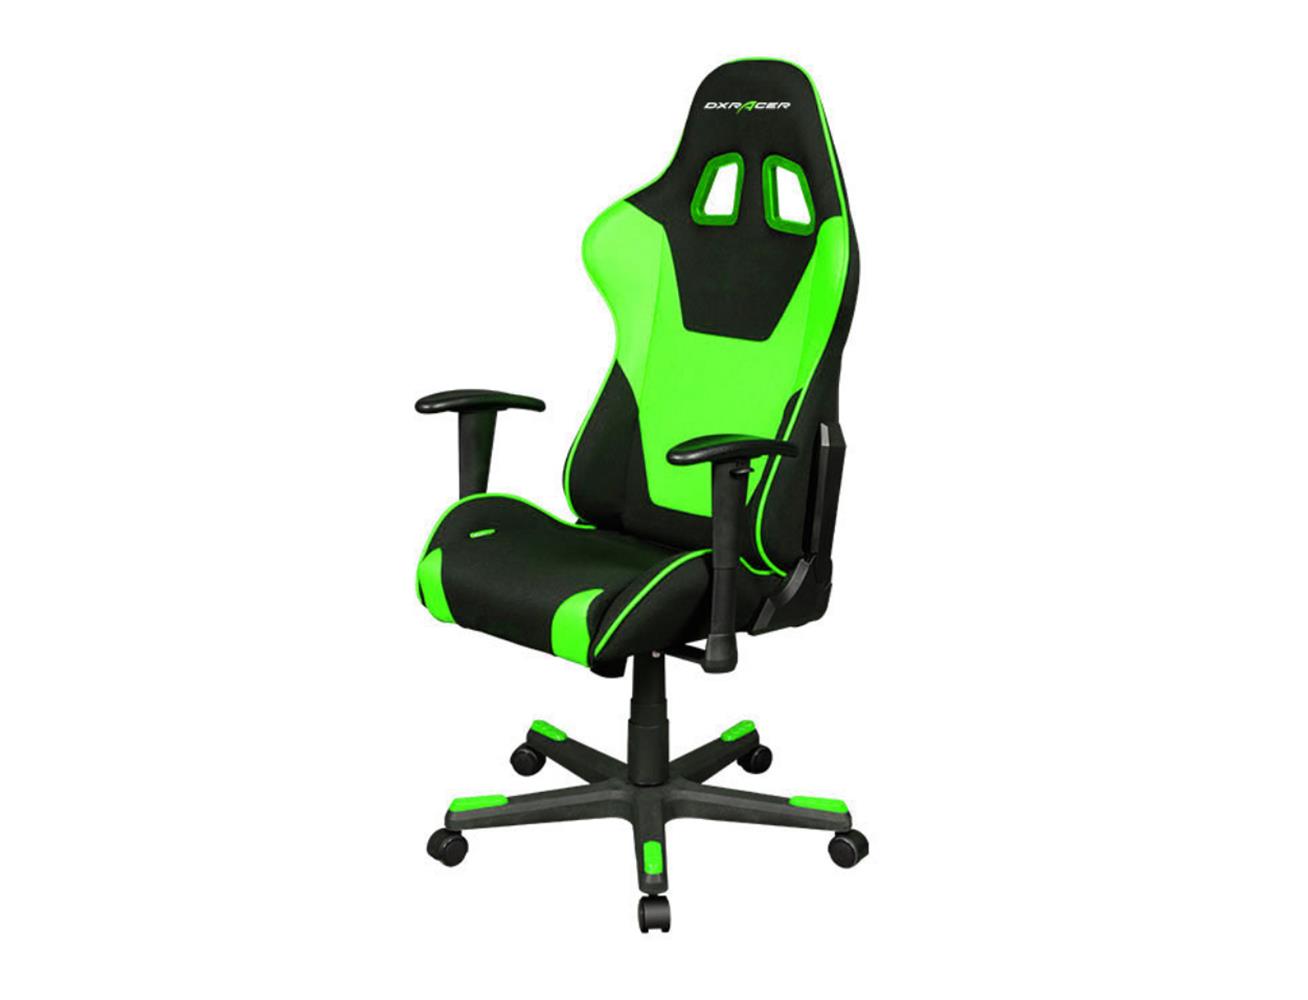  DXRacer  Formula Series Gaming  Chair  Black Green  Blink 